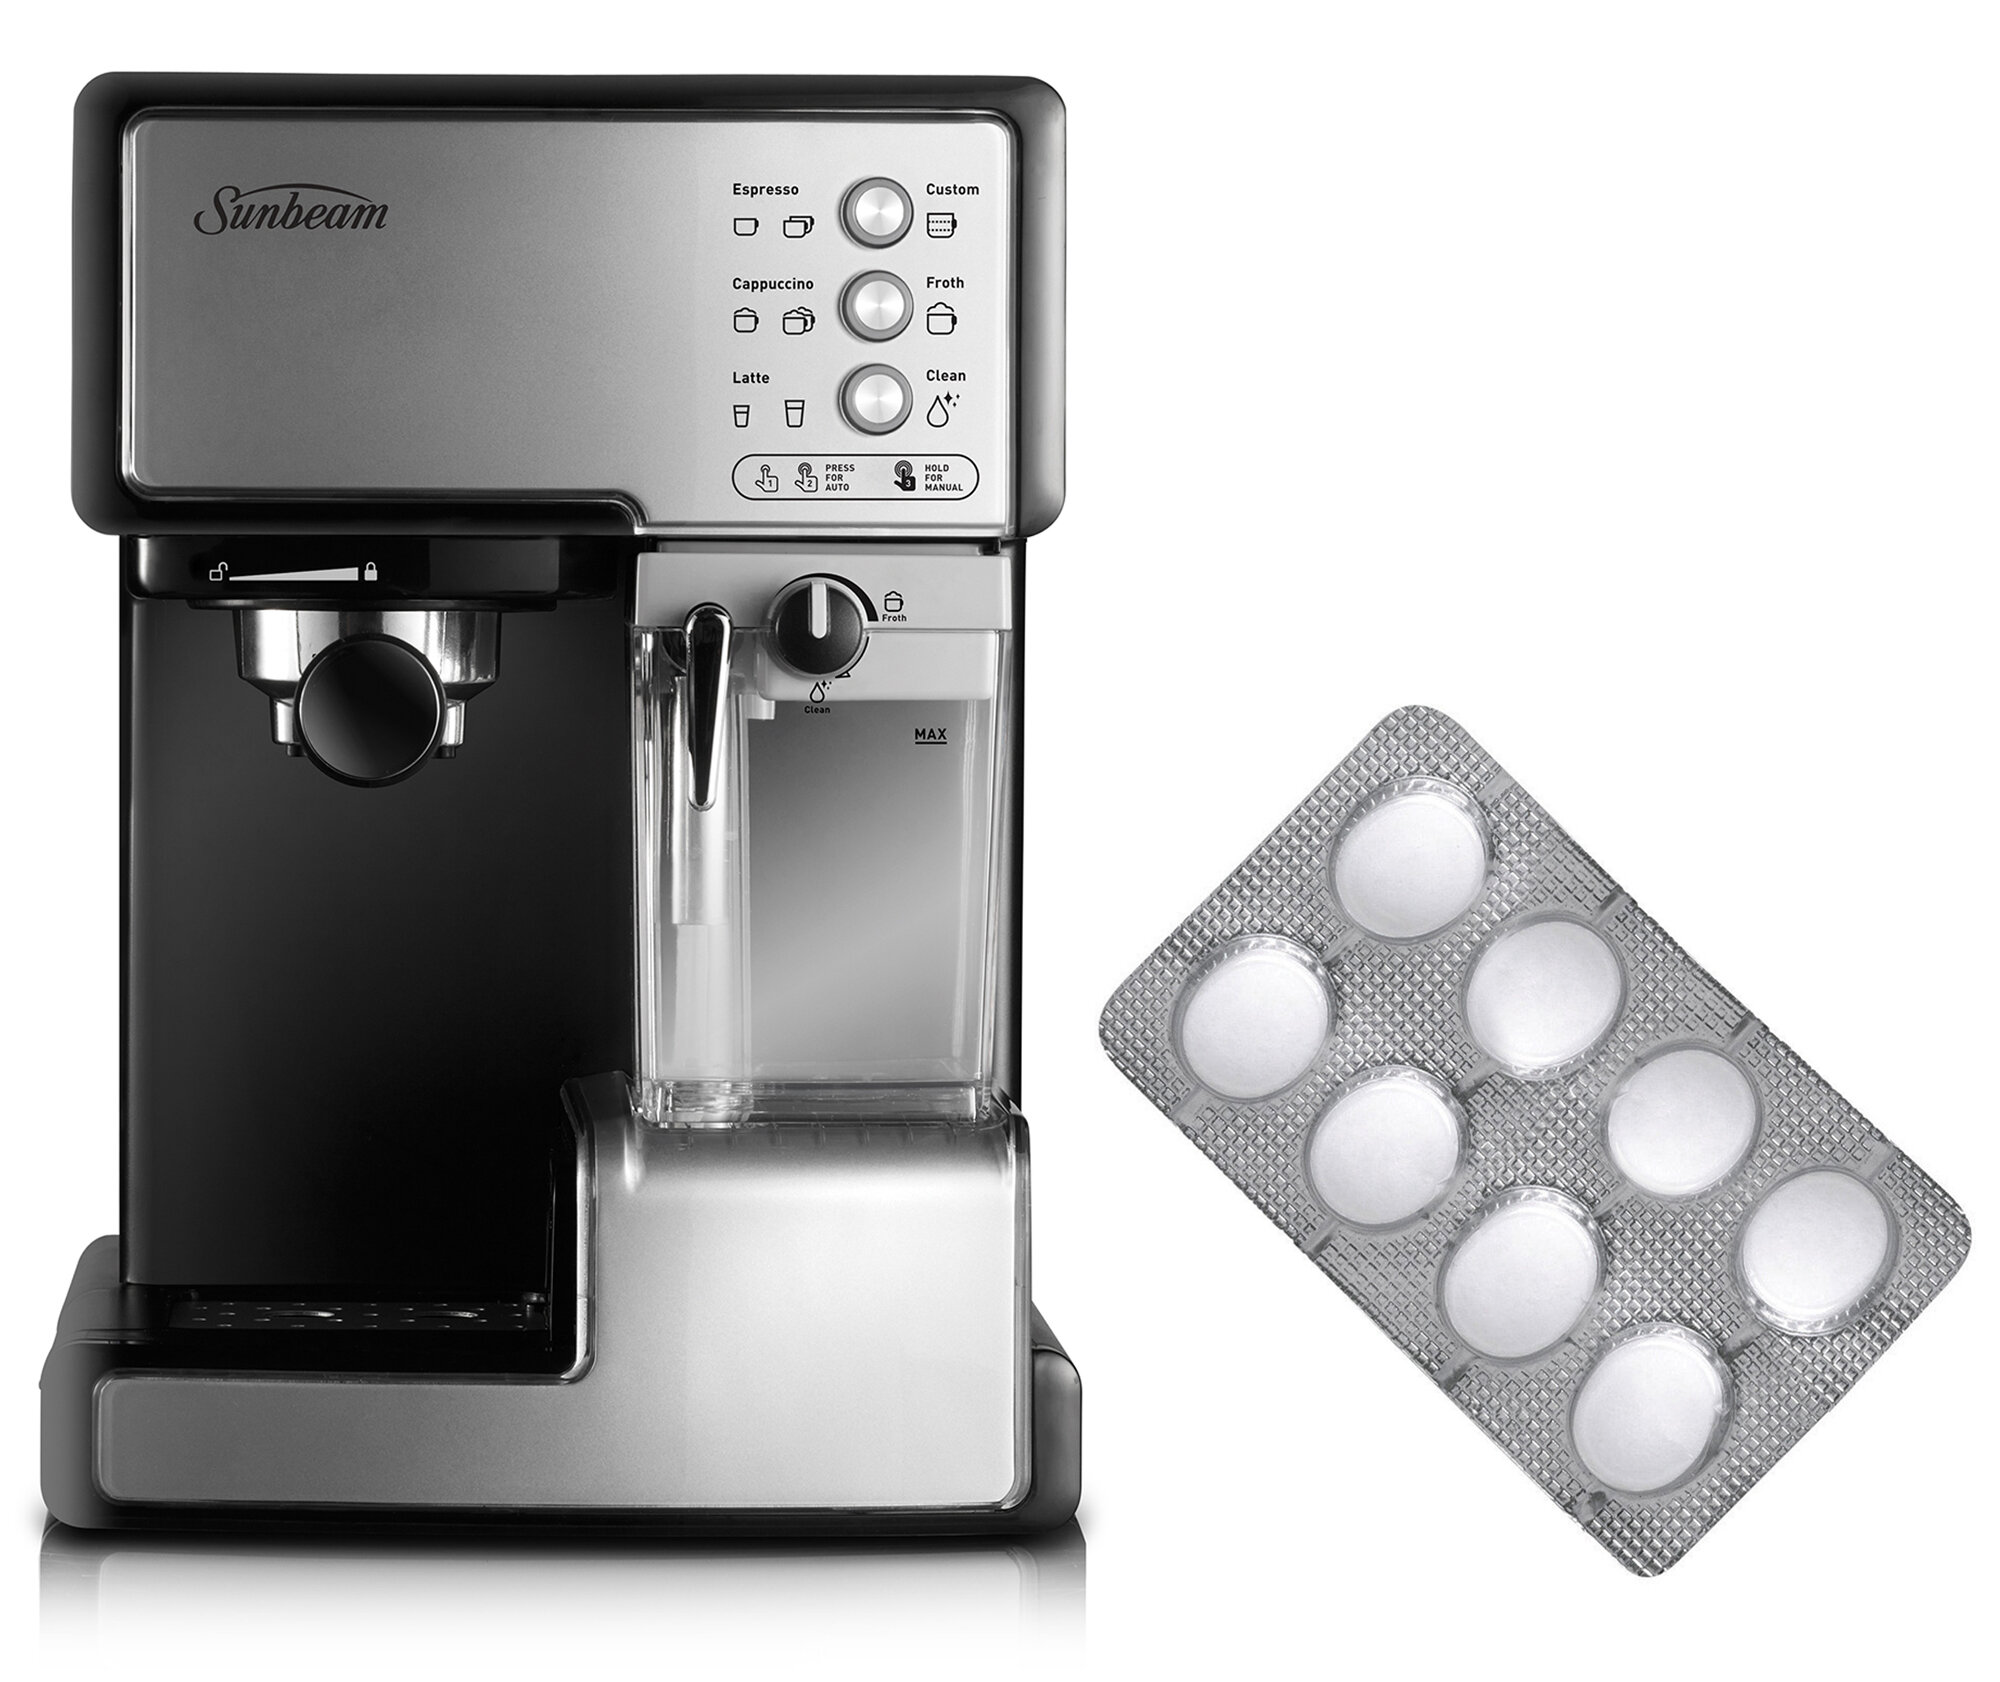 Sunbeam Machine Cleaning Tablets And Cafe Barista Coffee Machine Em0020em5000 Appliances Online